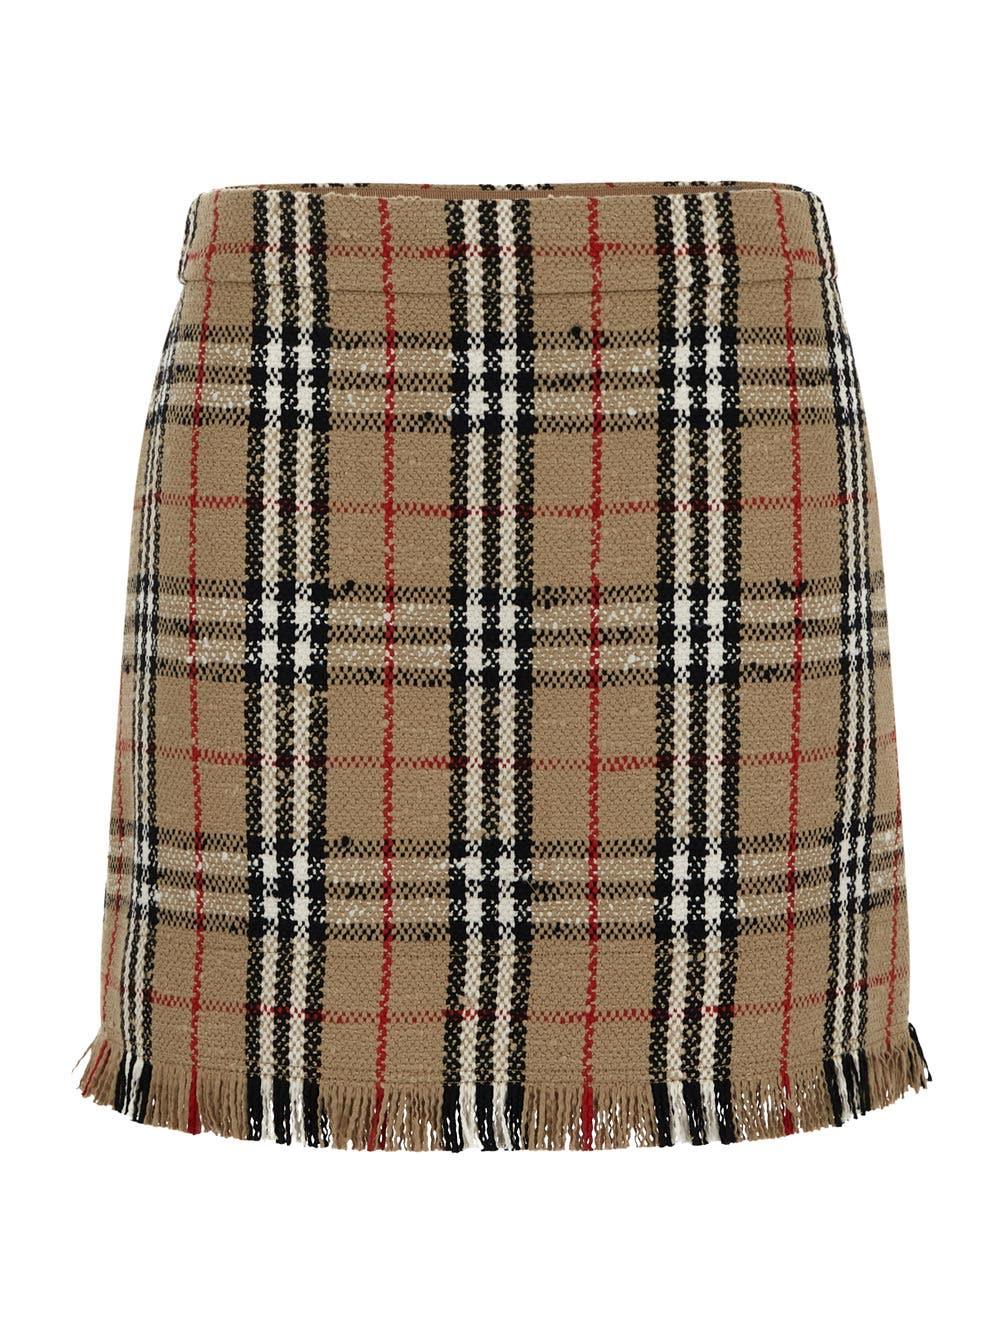 Burberry Vintage Check Bouclé Mini Skirt